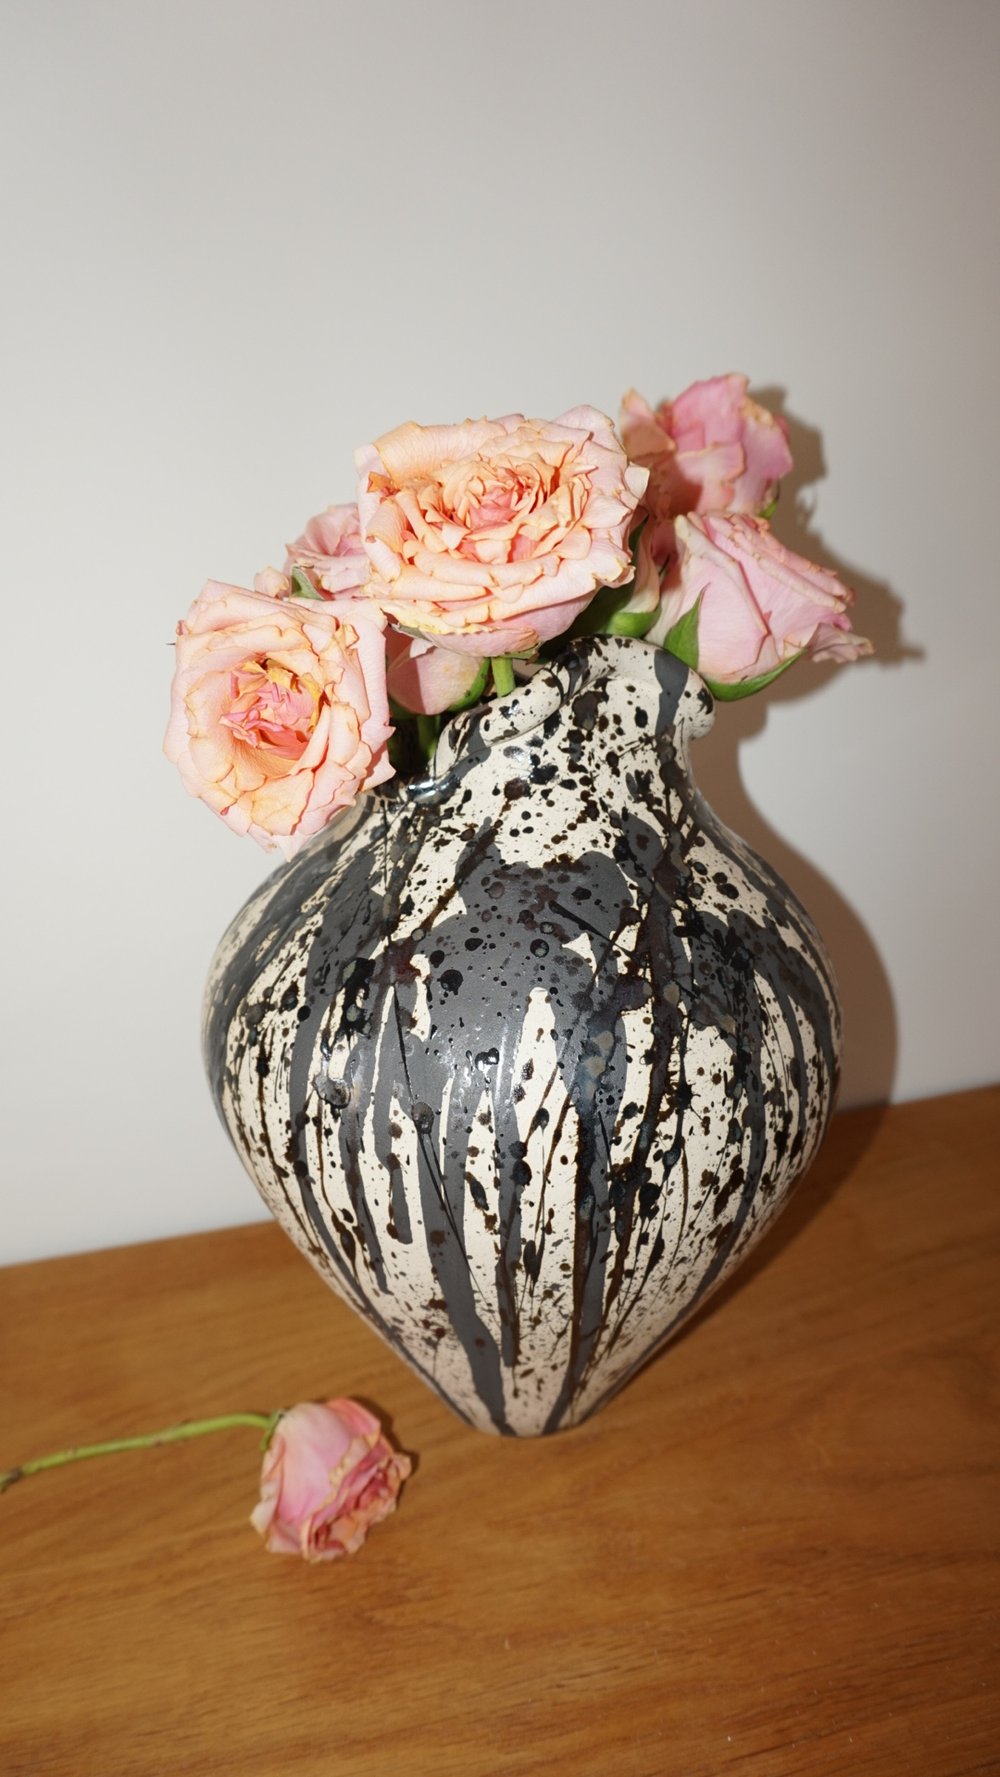 Image of "The big splash vase”